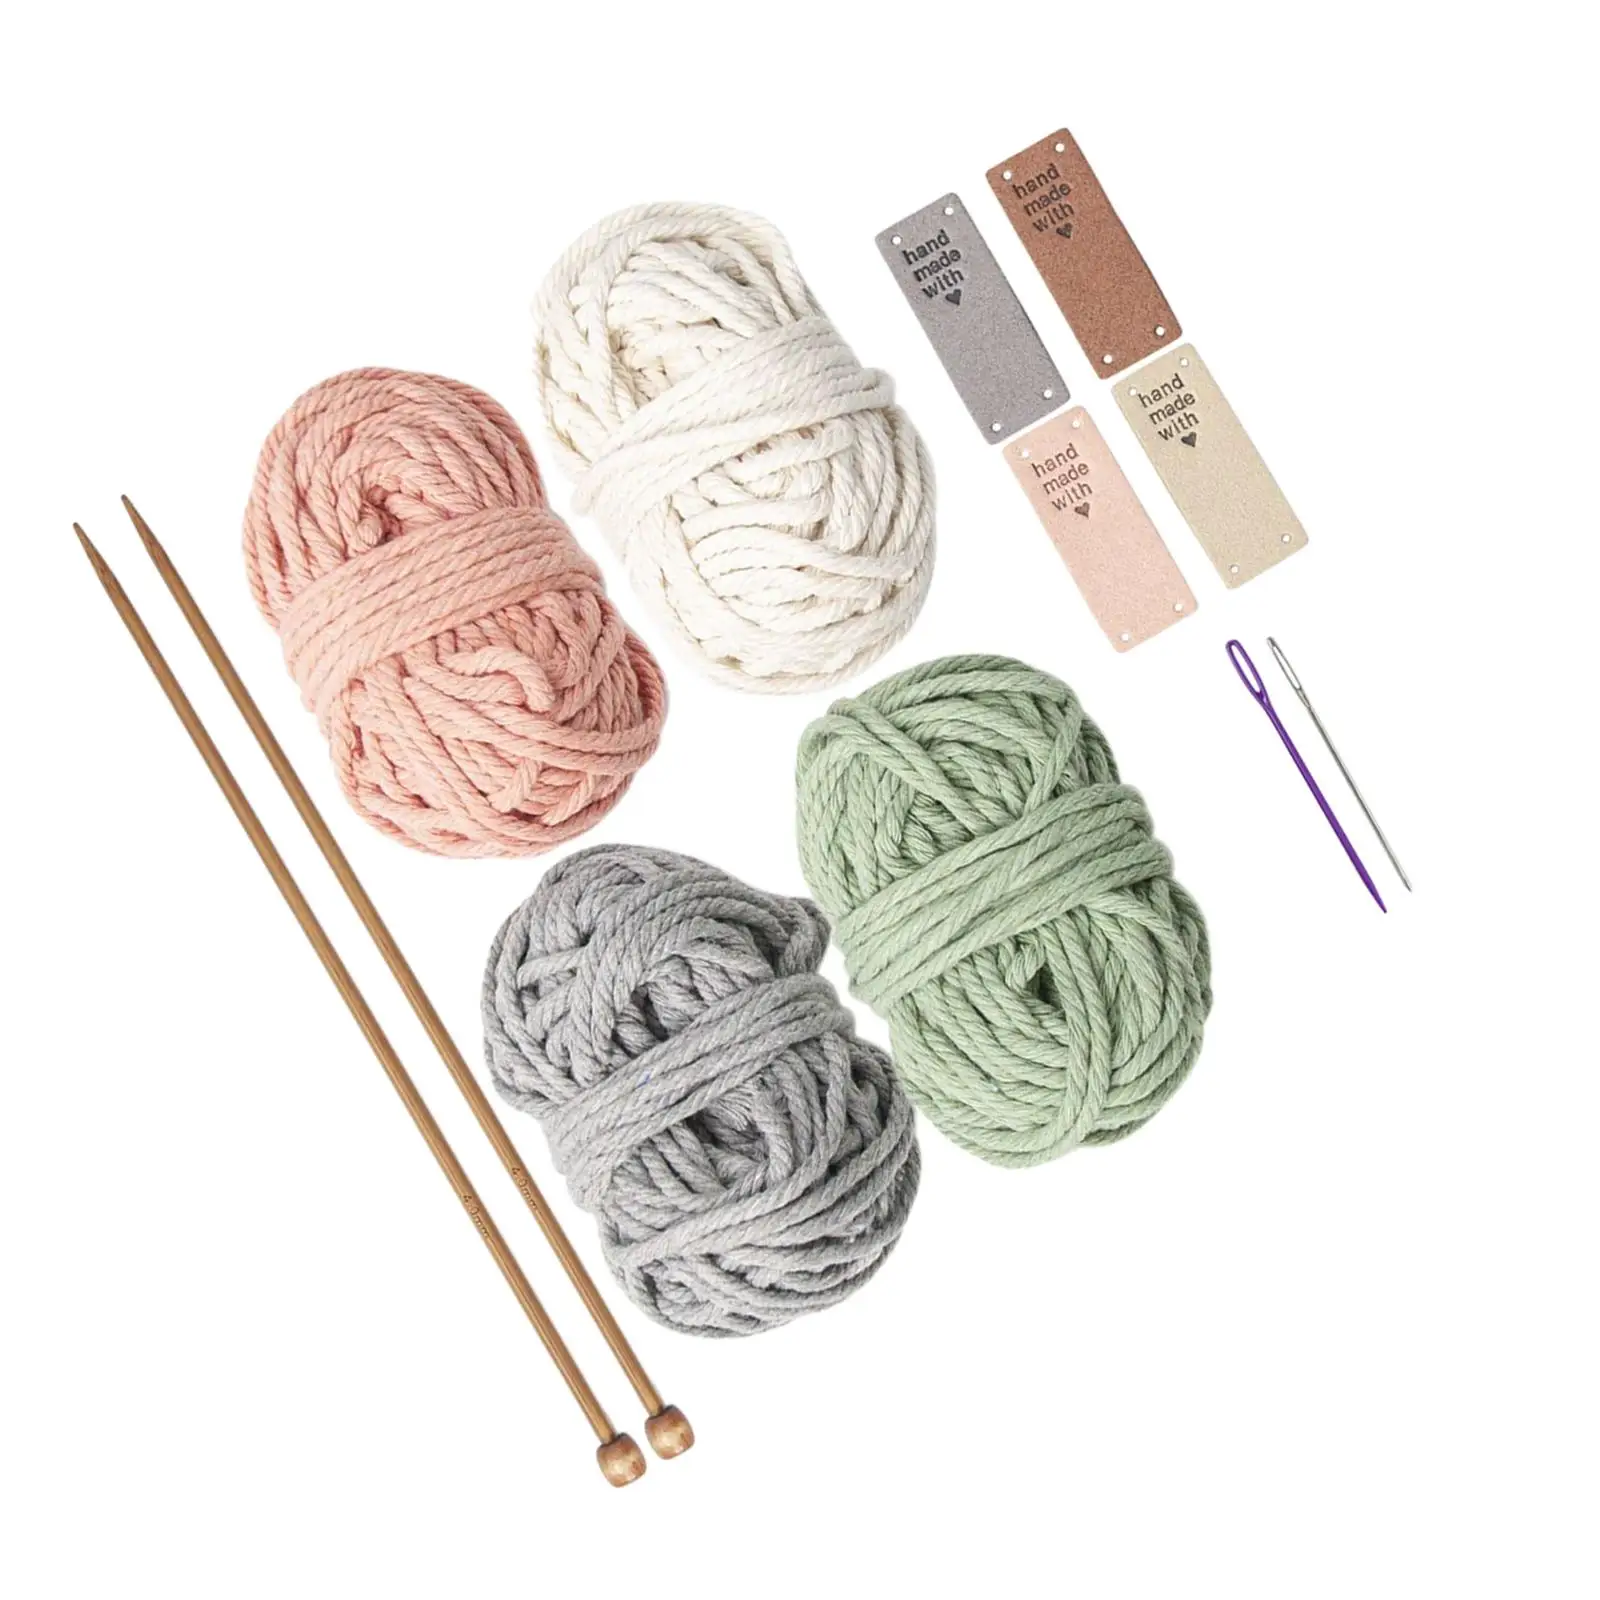 Macrame Coaster DIY kit Decor Placemat Coasters Making Set Arts Drink Cup Pad for Starter Adults Kids Knitting Needlework